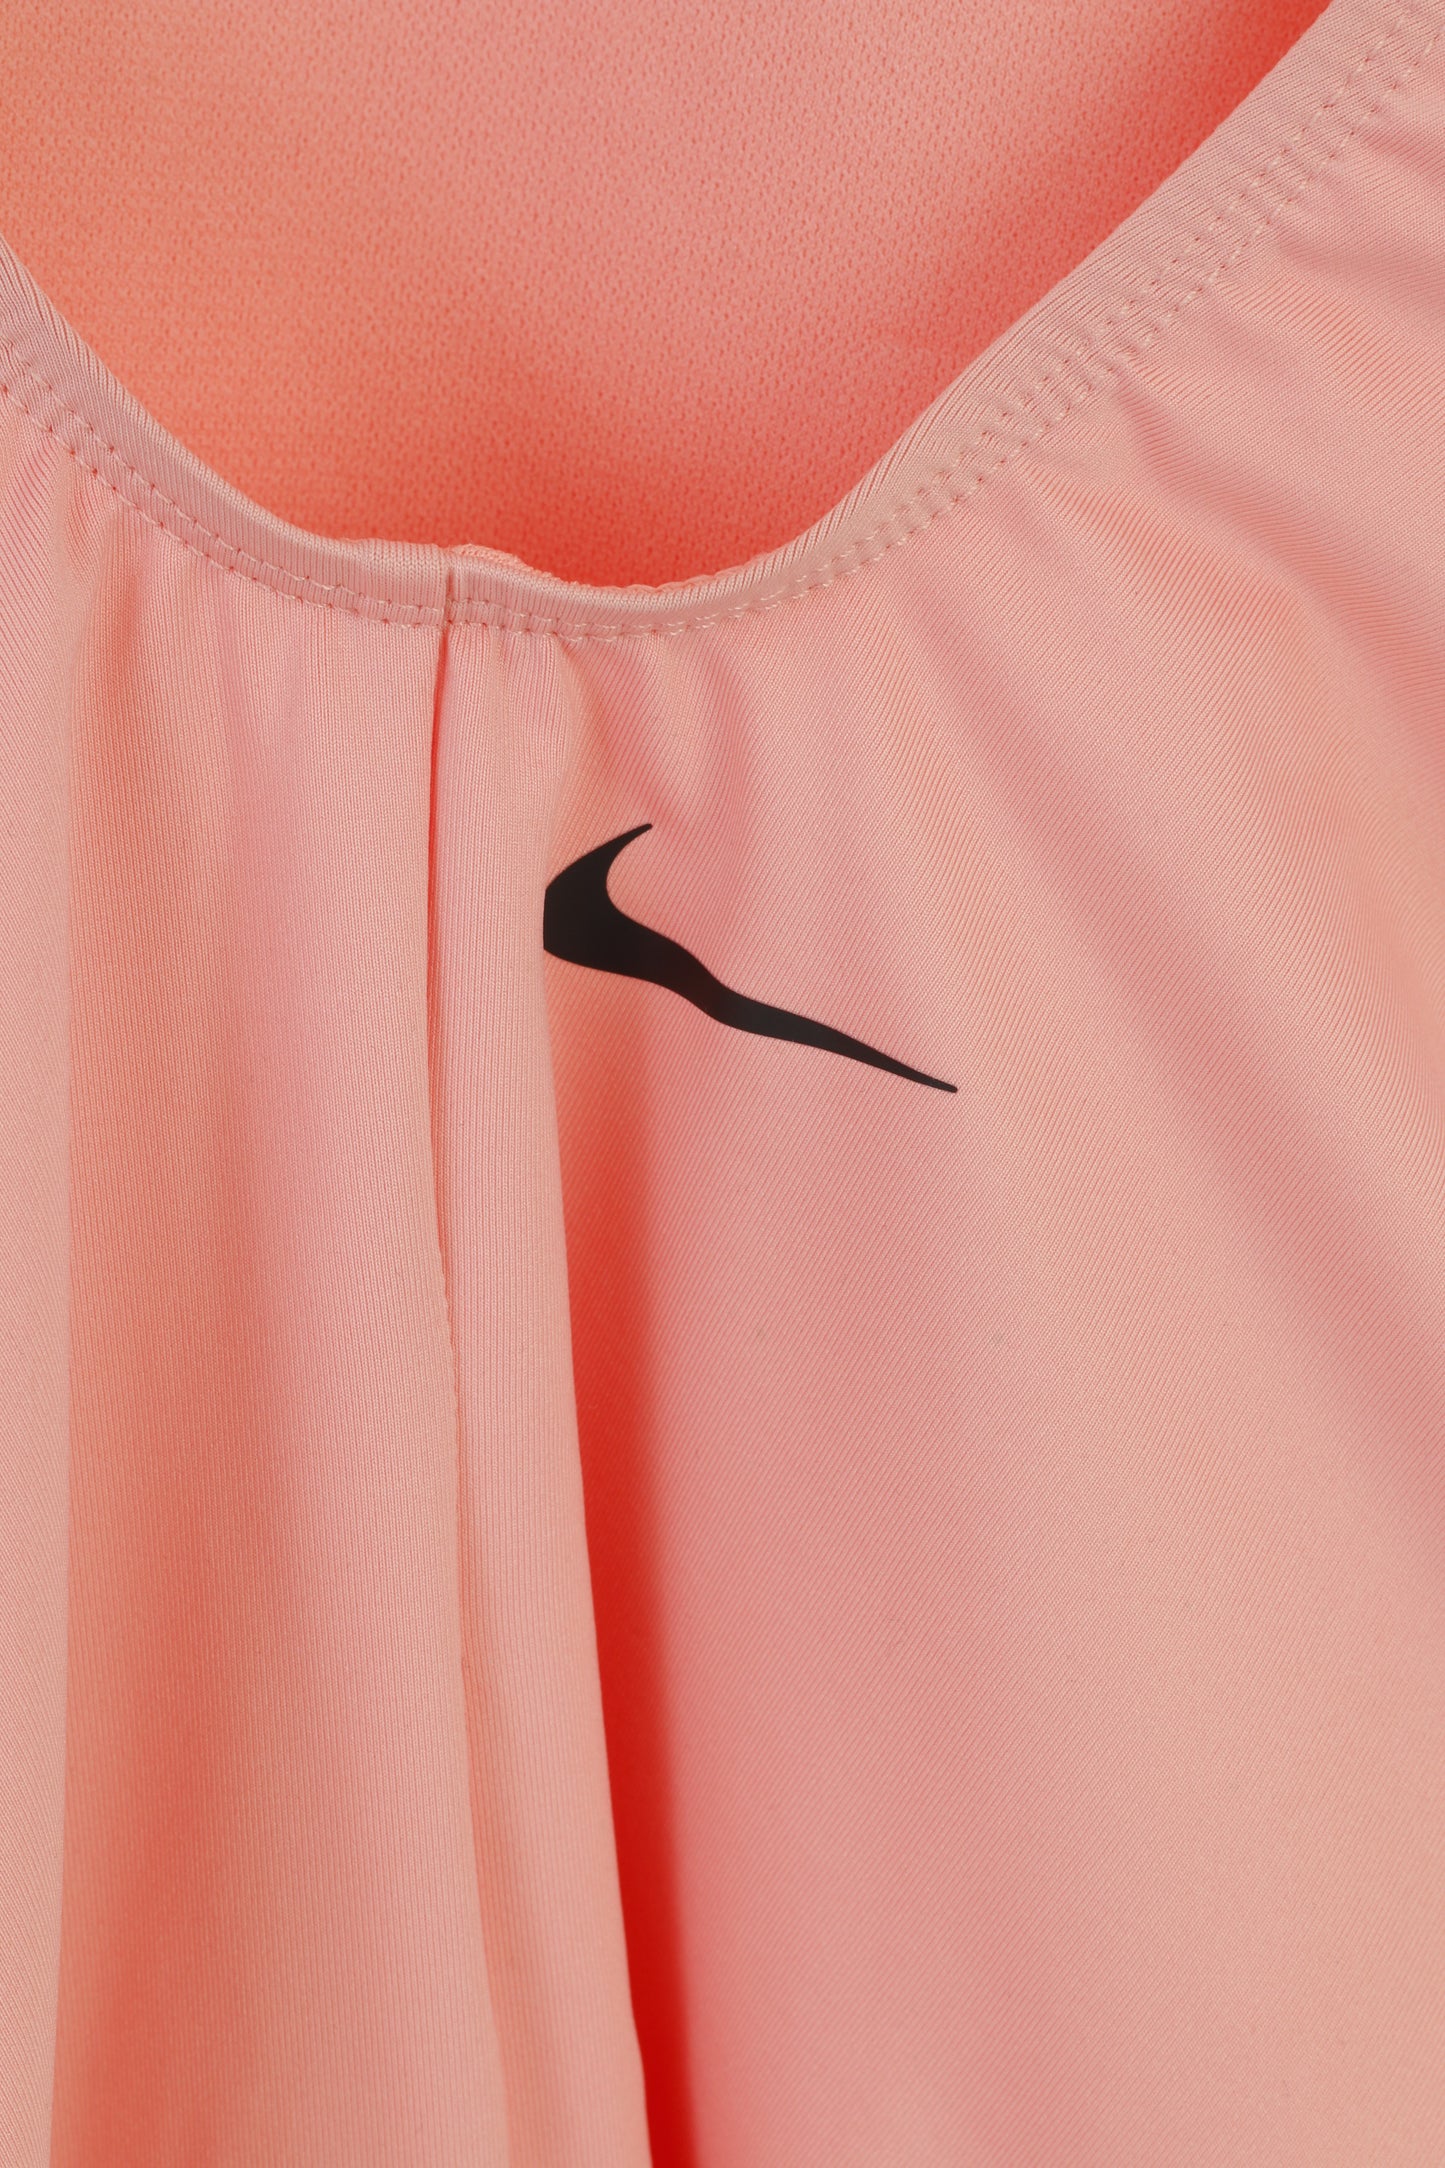 NEW Nike Woman L Swimsuits Pink Waterproof Elastic Sport Swimming Sleevelees One Piece Top